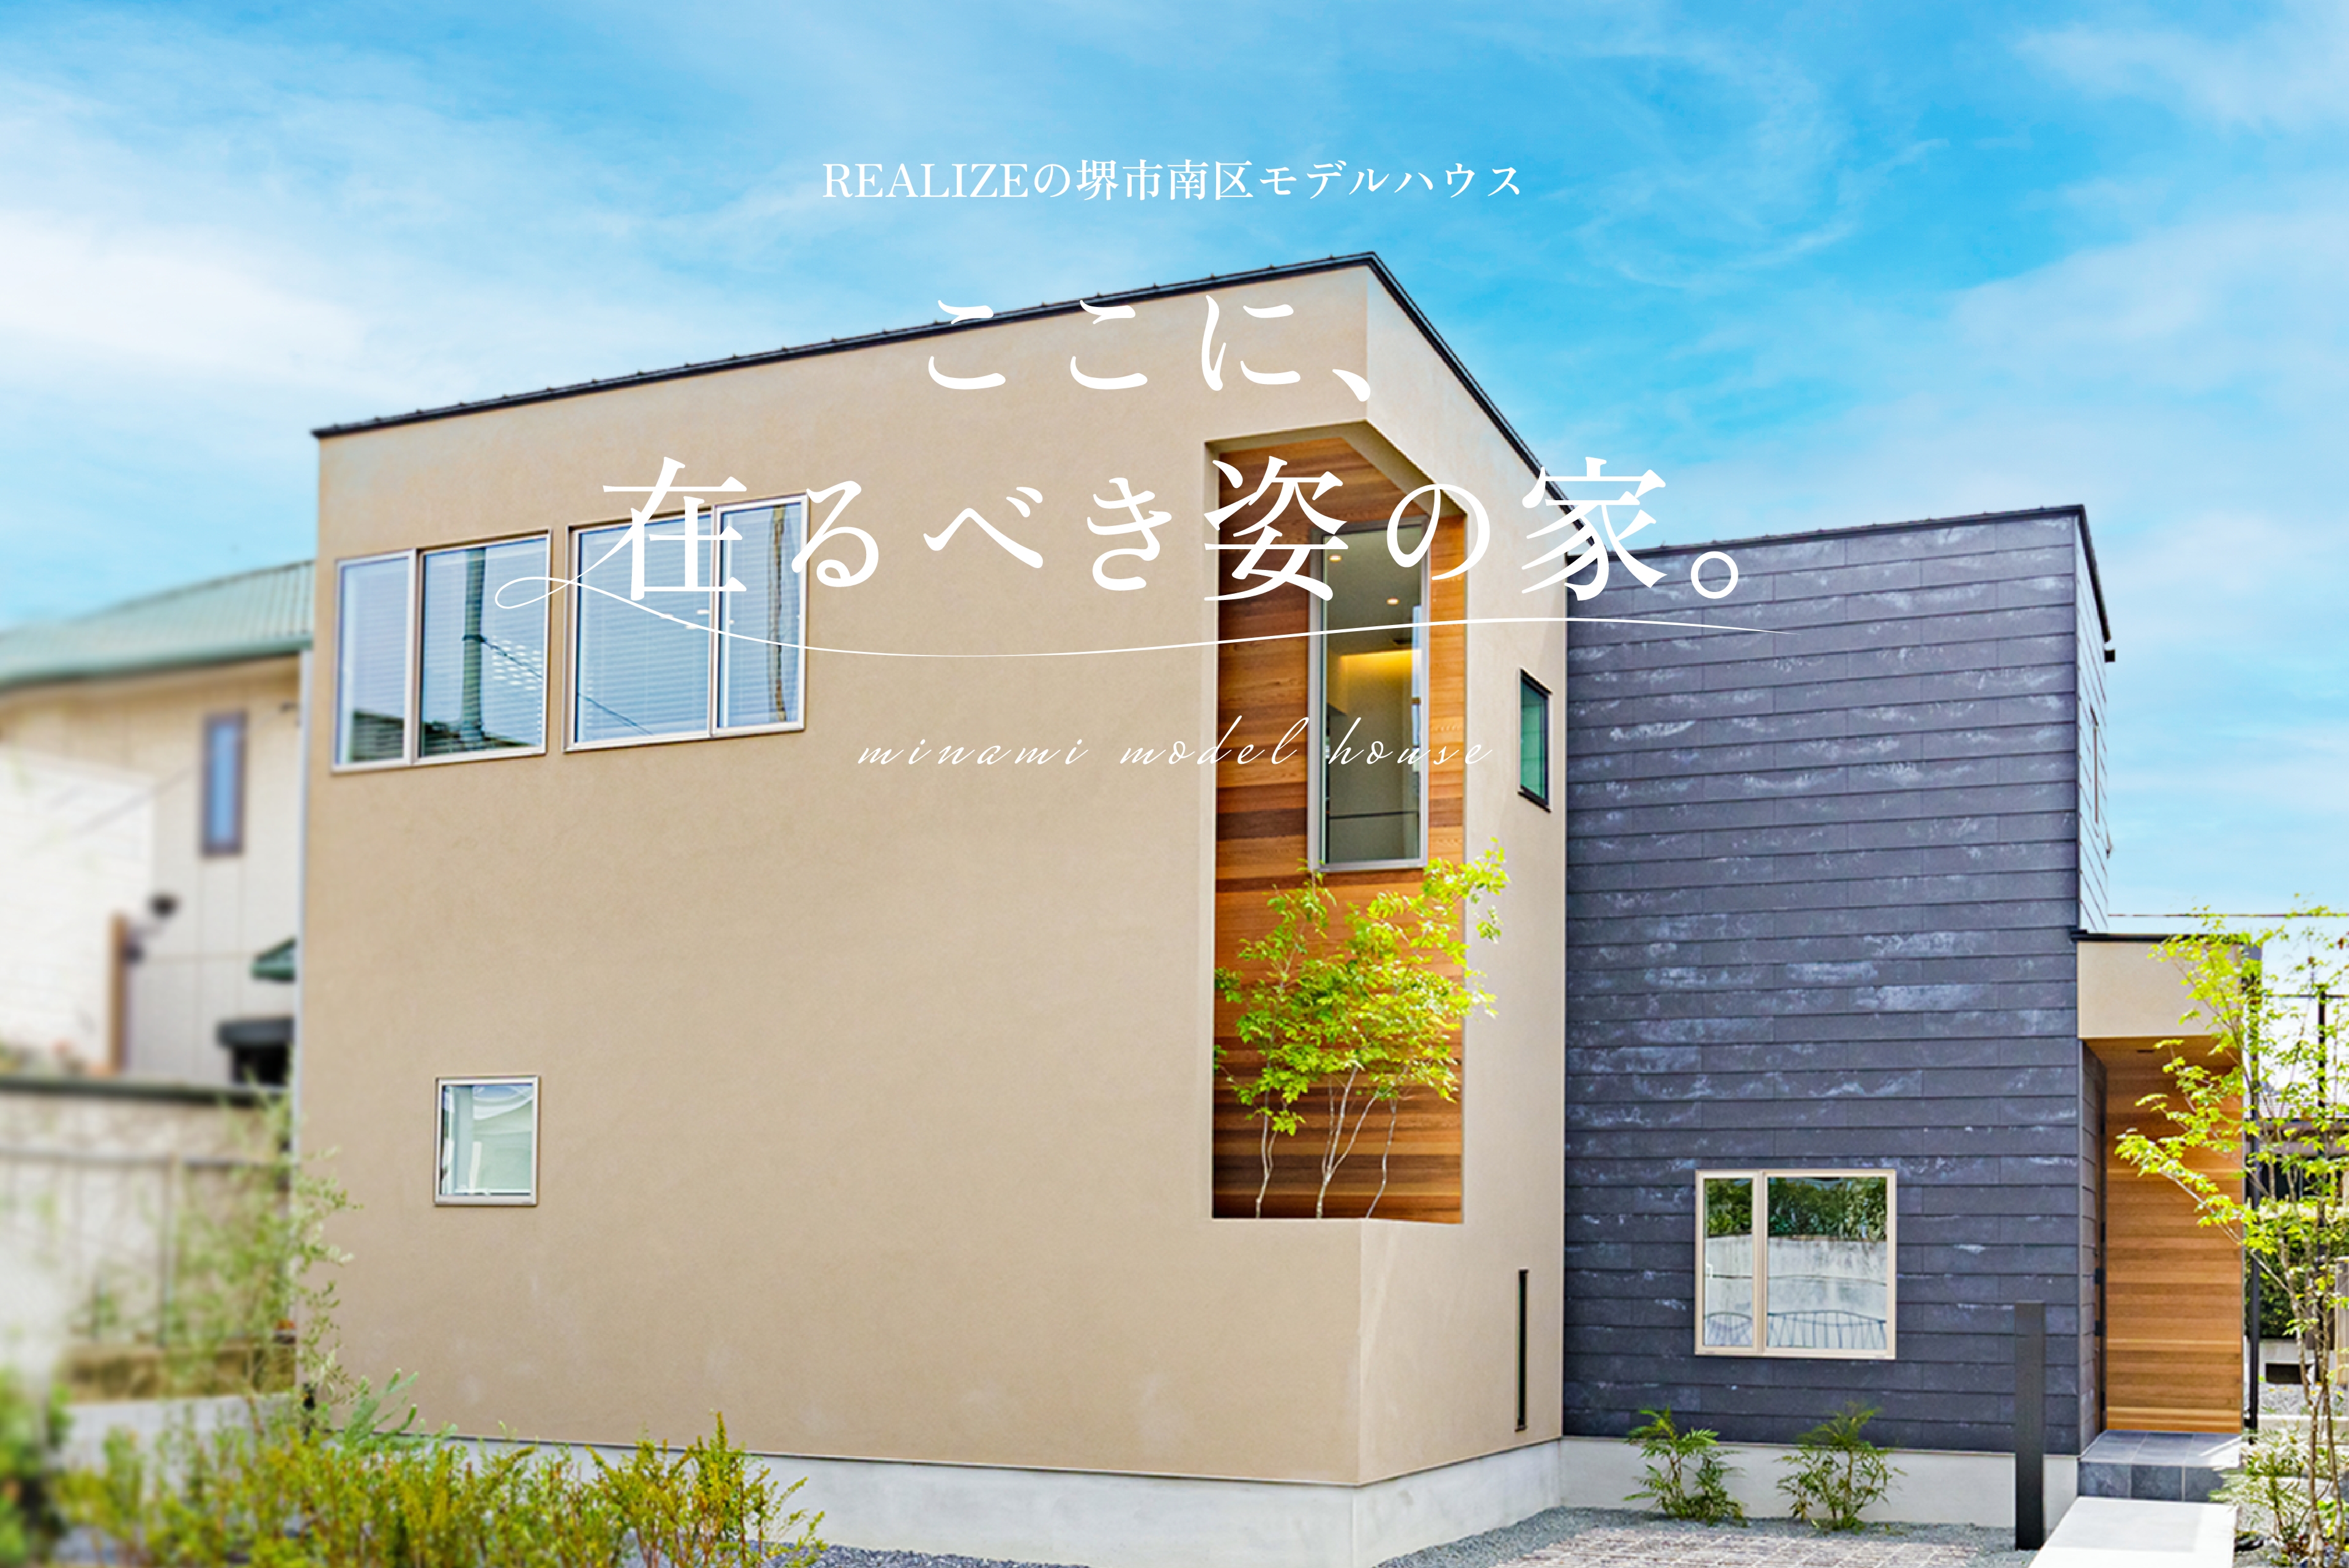 REALIZEの堺市南区モデルハウス ここに、在るべき姿の家 minami model house